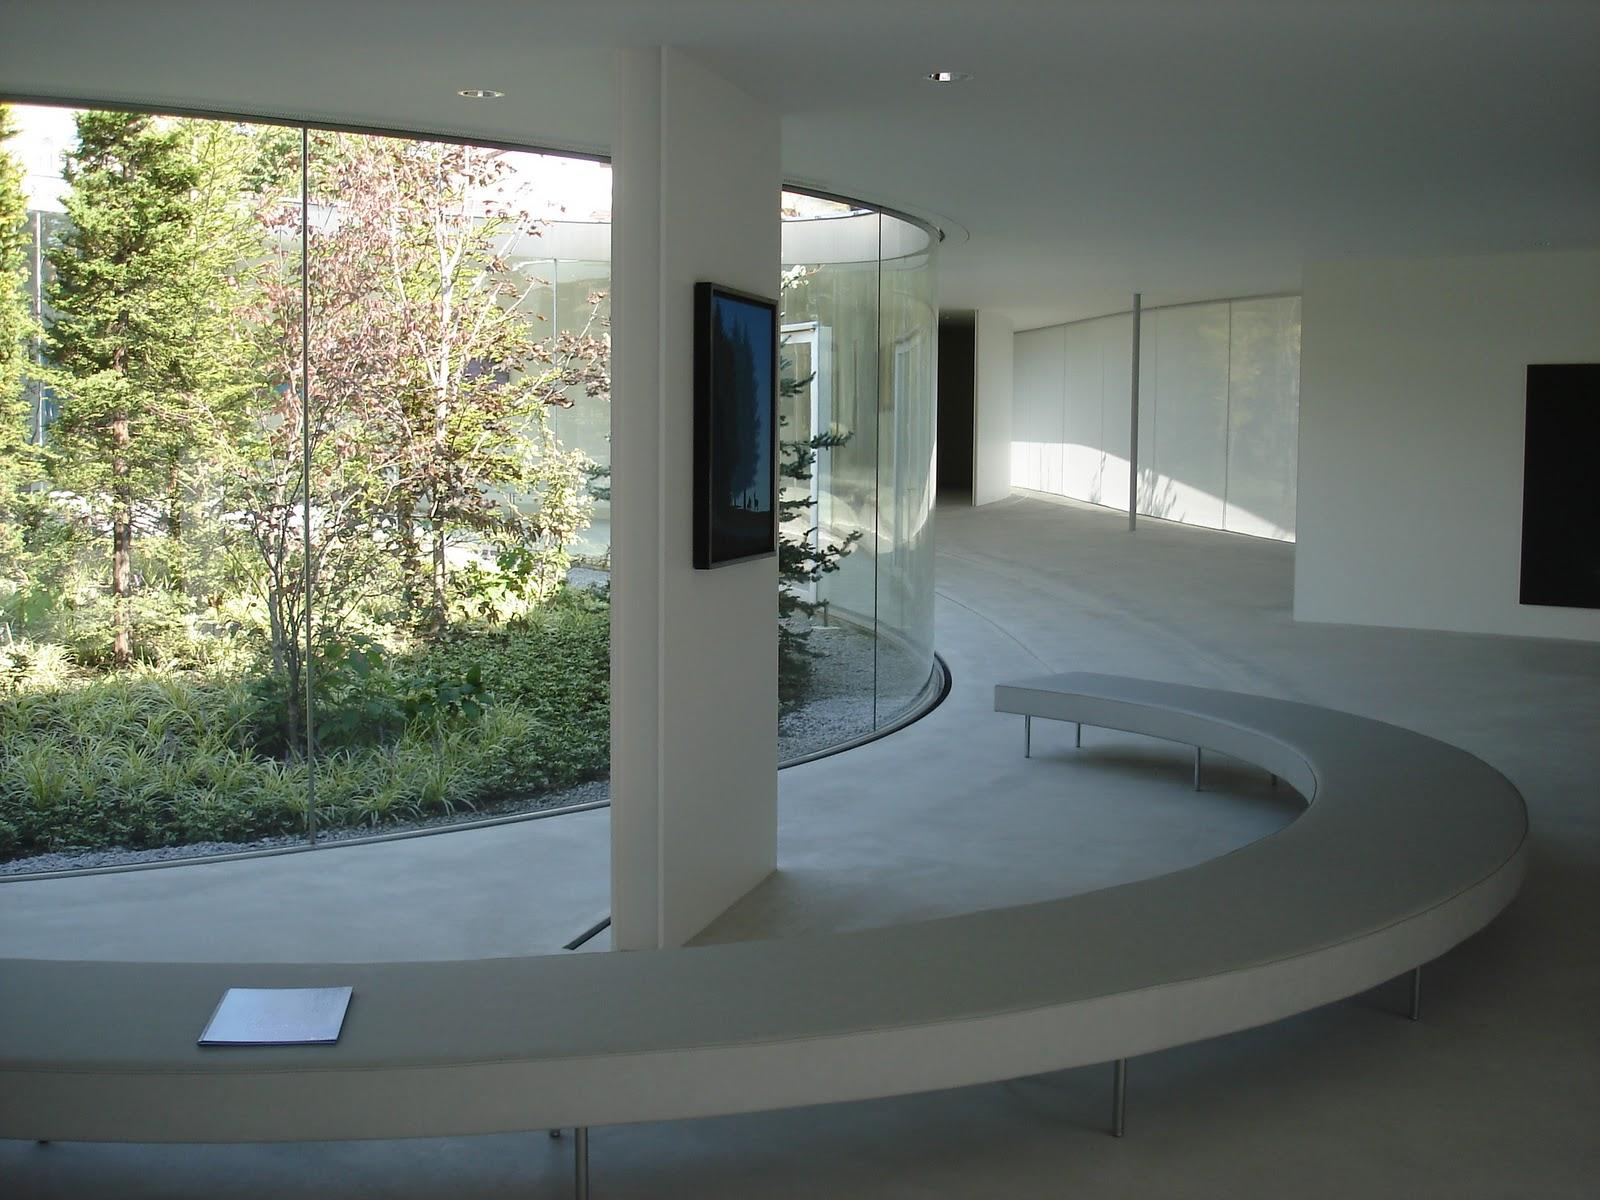 Delicia: Ryue Nishizawa y el exquisito Museo Hiroshi Senju en Karuizawa